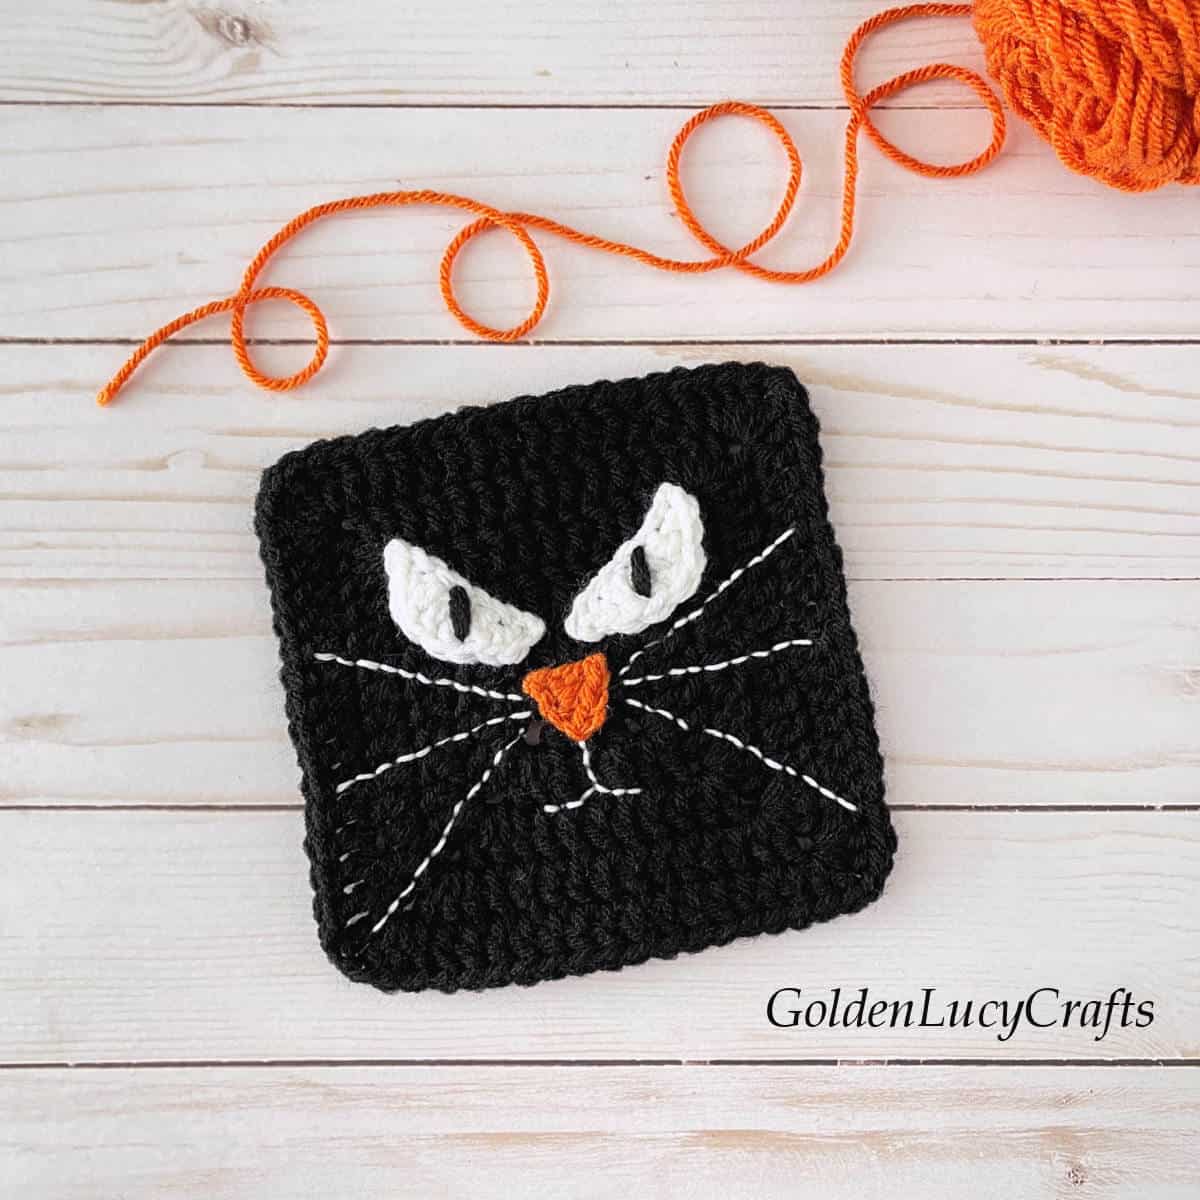 Crochet granny square black cat.